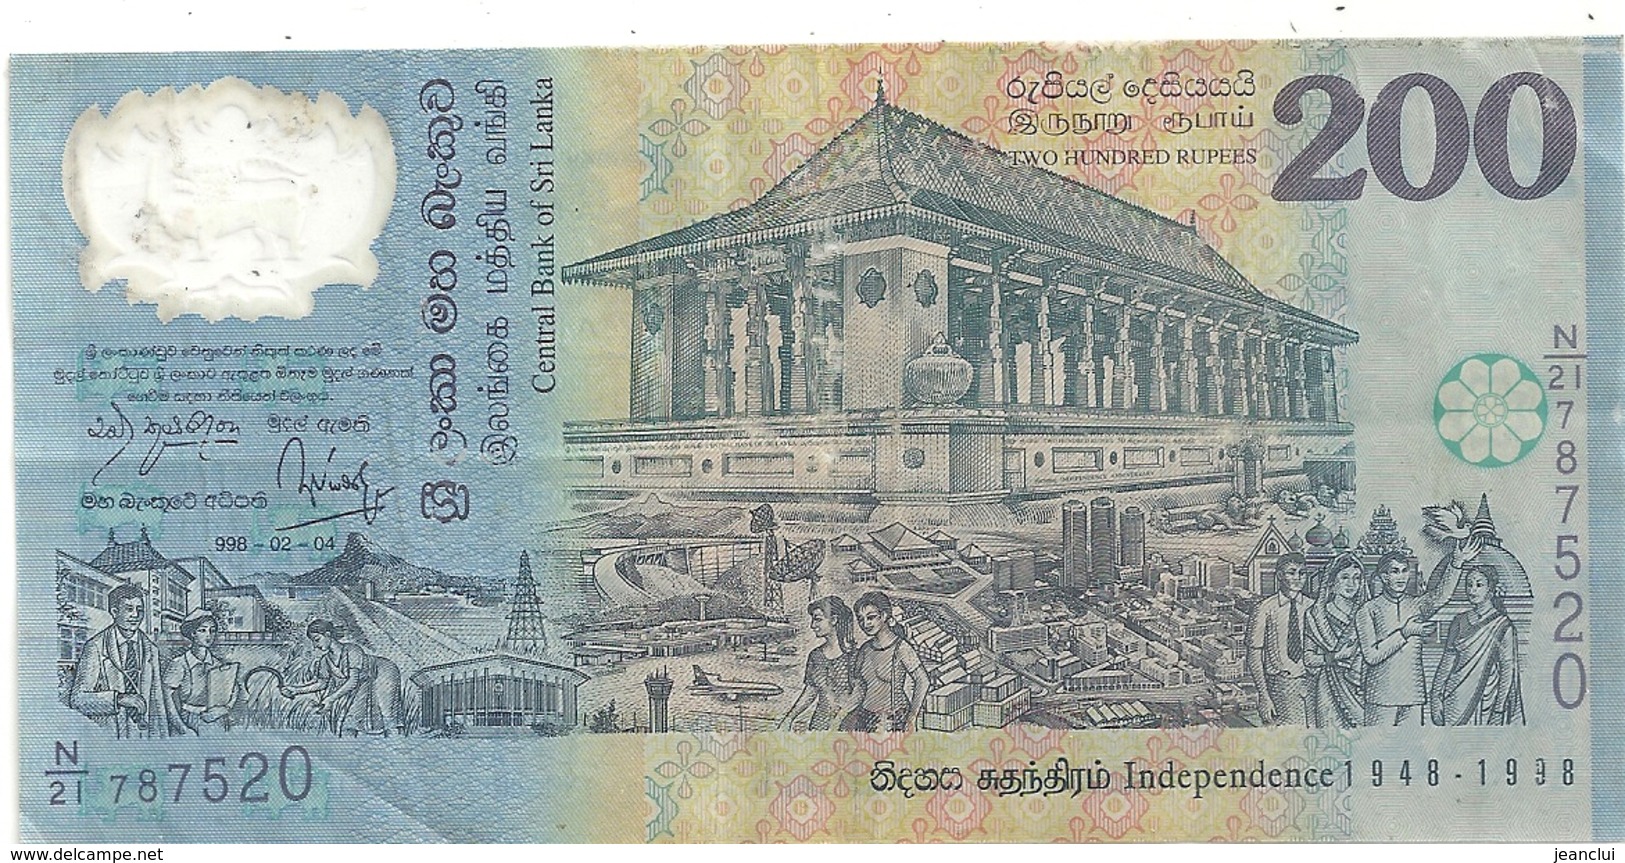 CENTRAL BANK OF SRI LANKA . 200 RUPPEES . CINQUANTENAIRE INDEPENDENCE 1948-1998  998-02-04  . N° N/21  787520. 2 SCANES - Sri Lanka